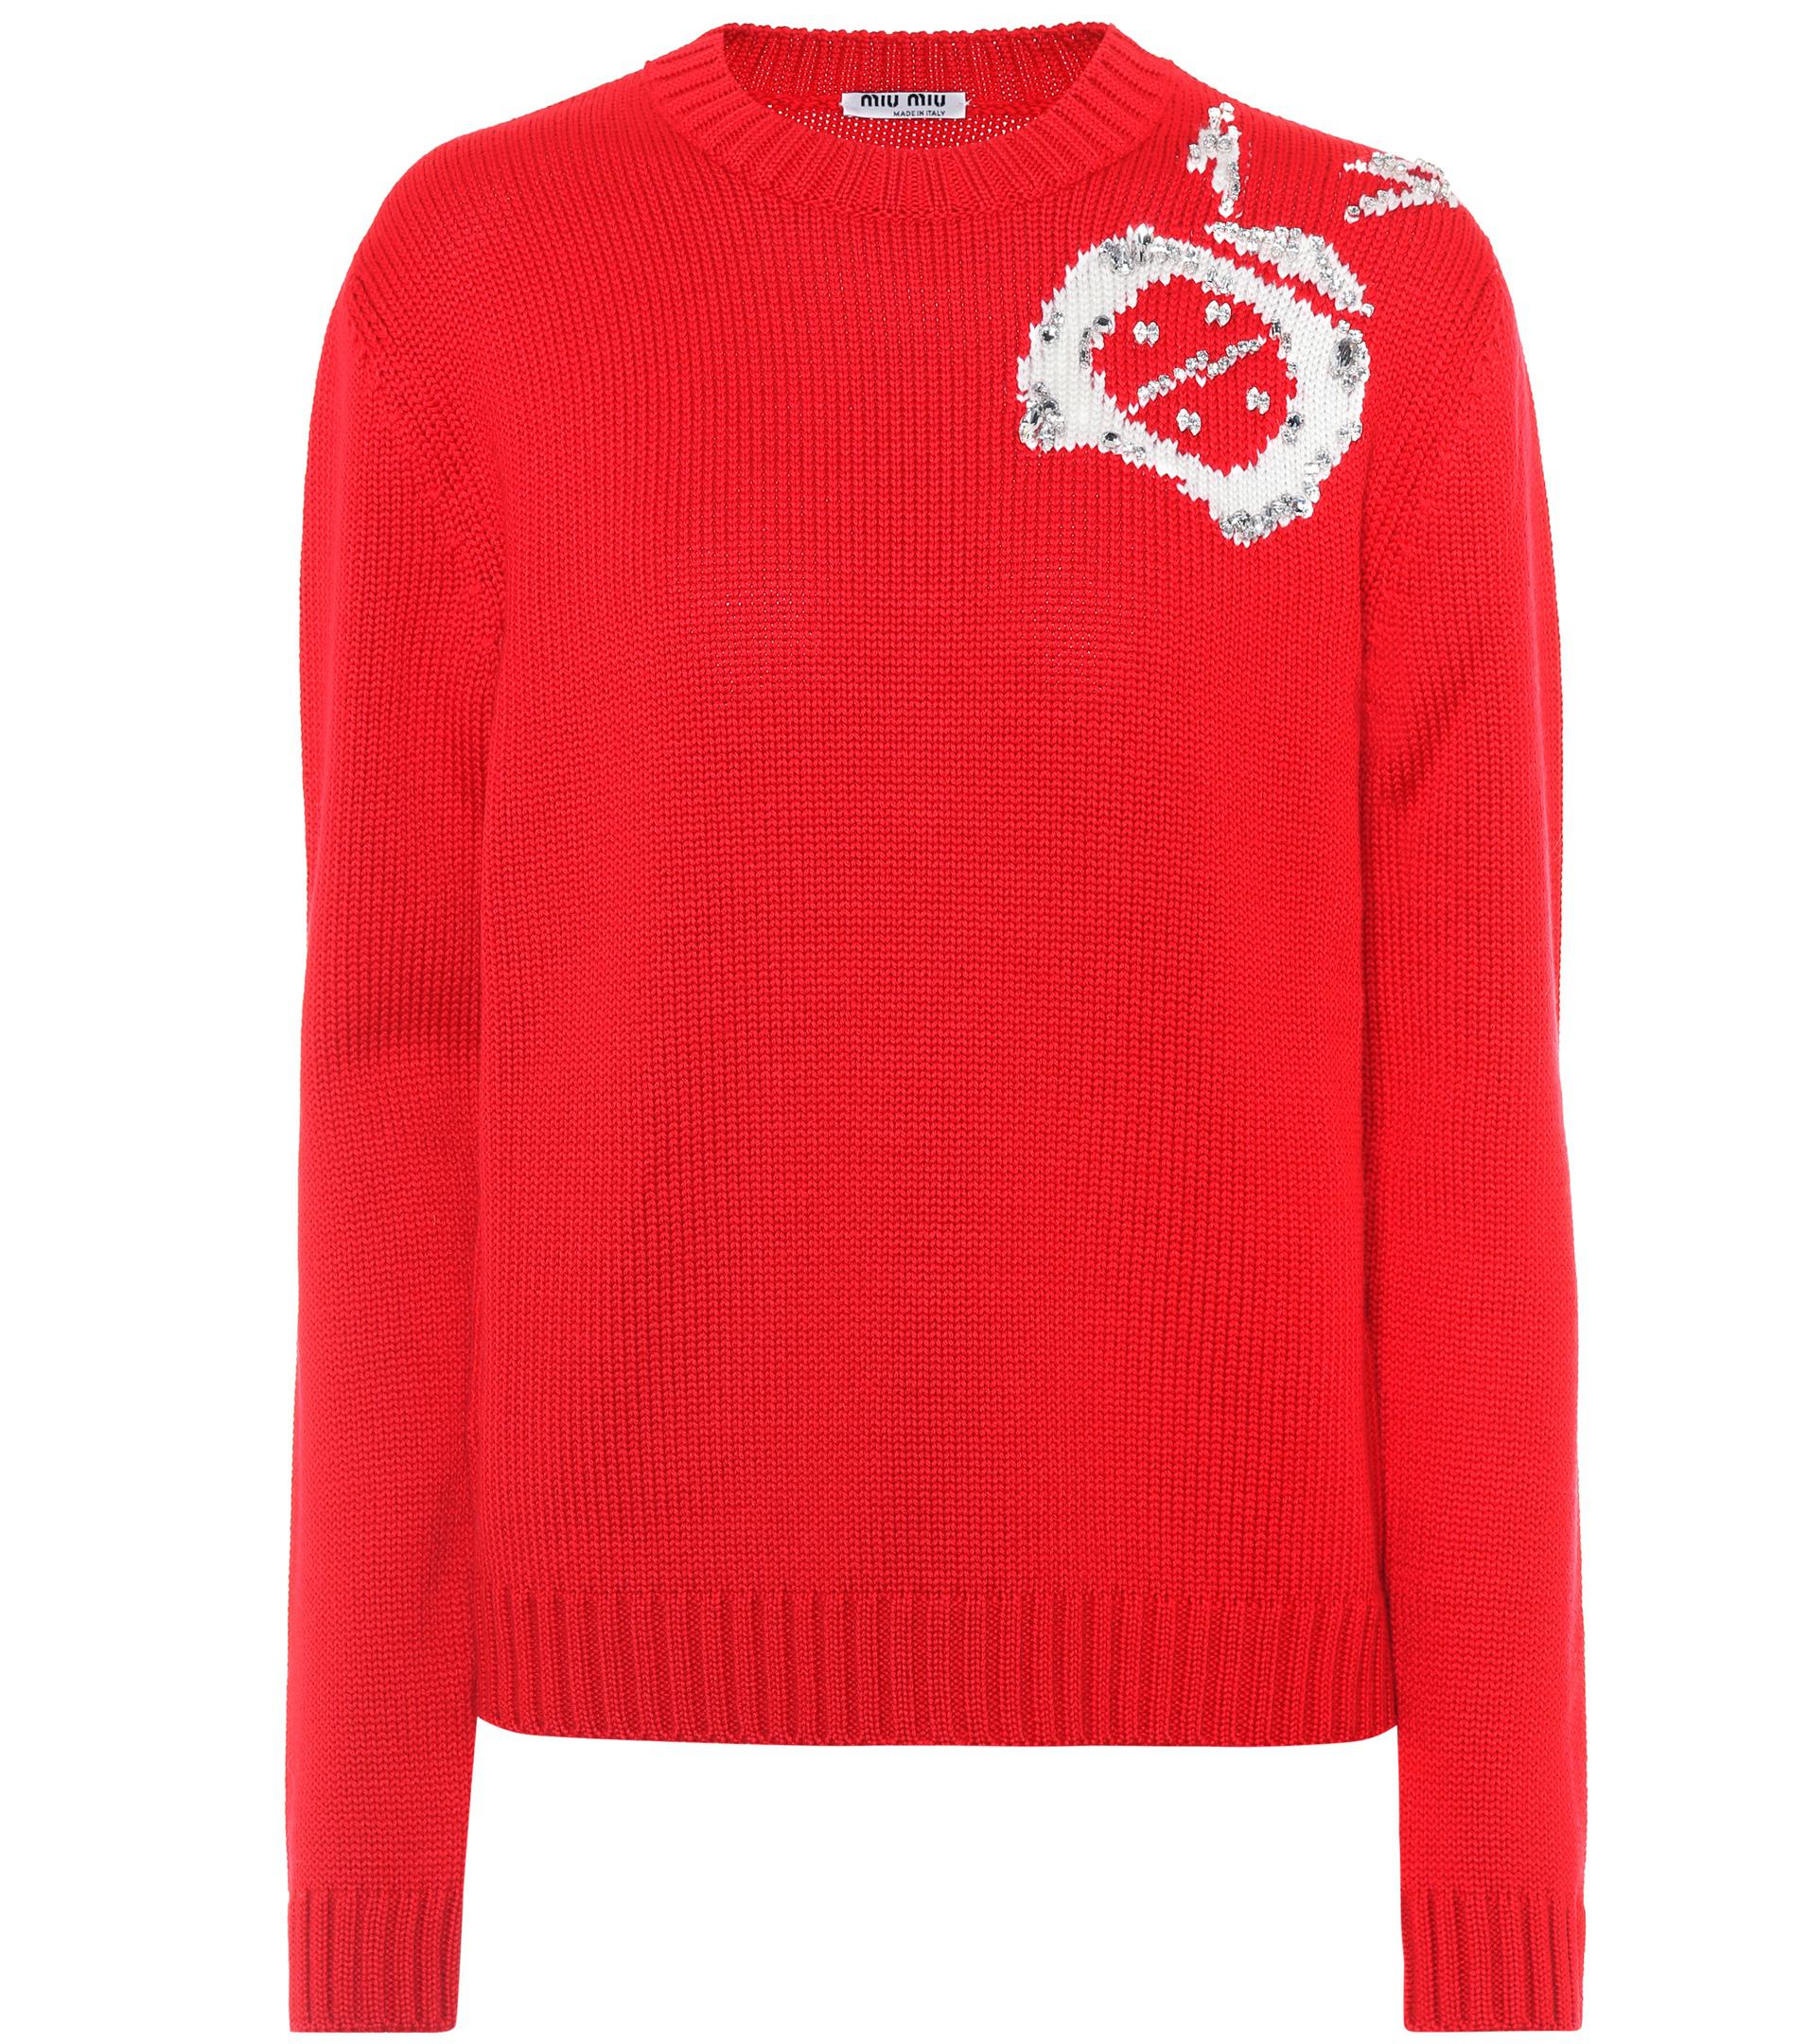 Miu Miu Virgin Wool Sweater in Red - Lyst